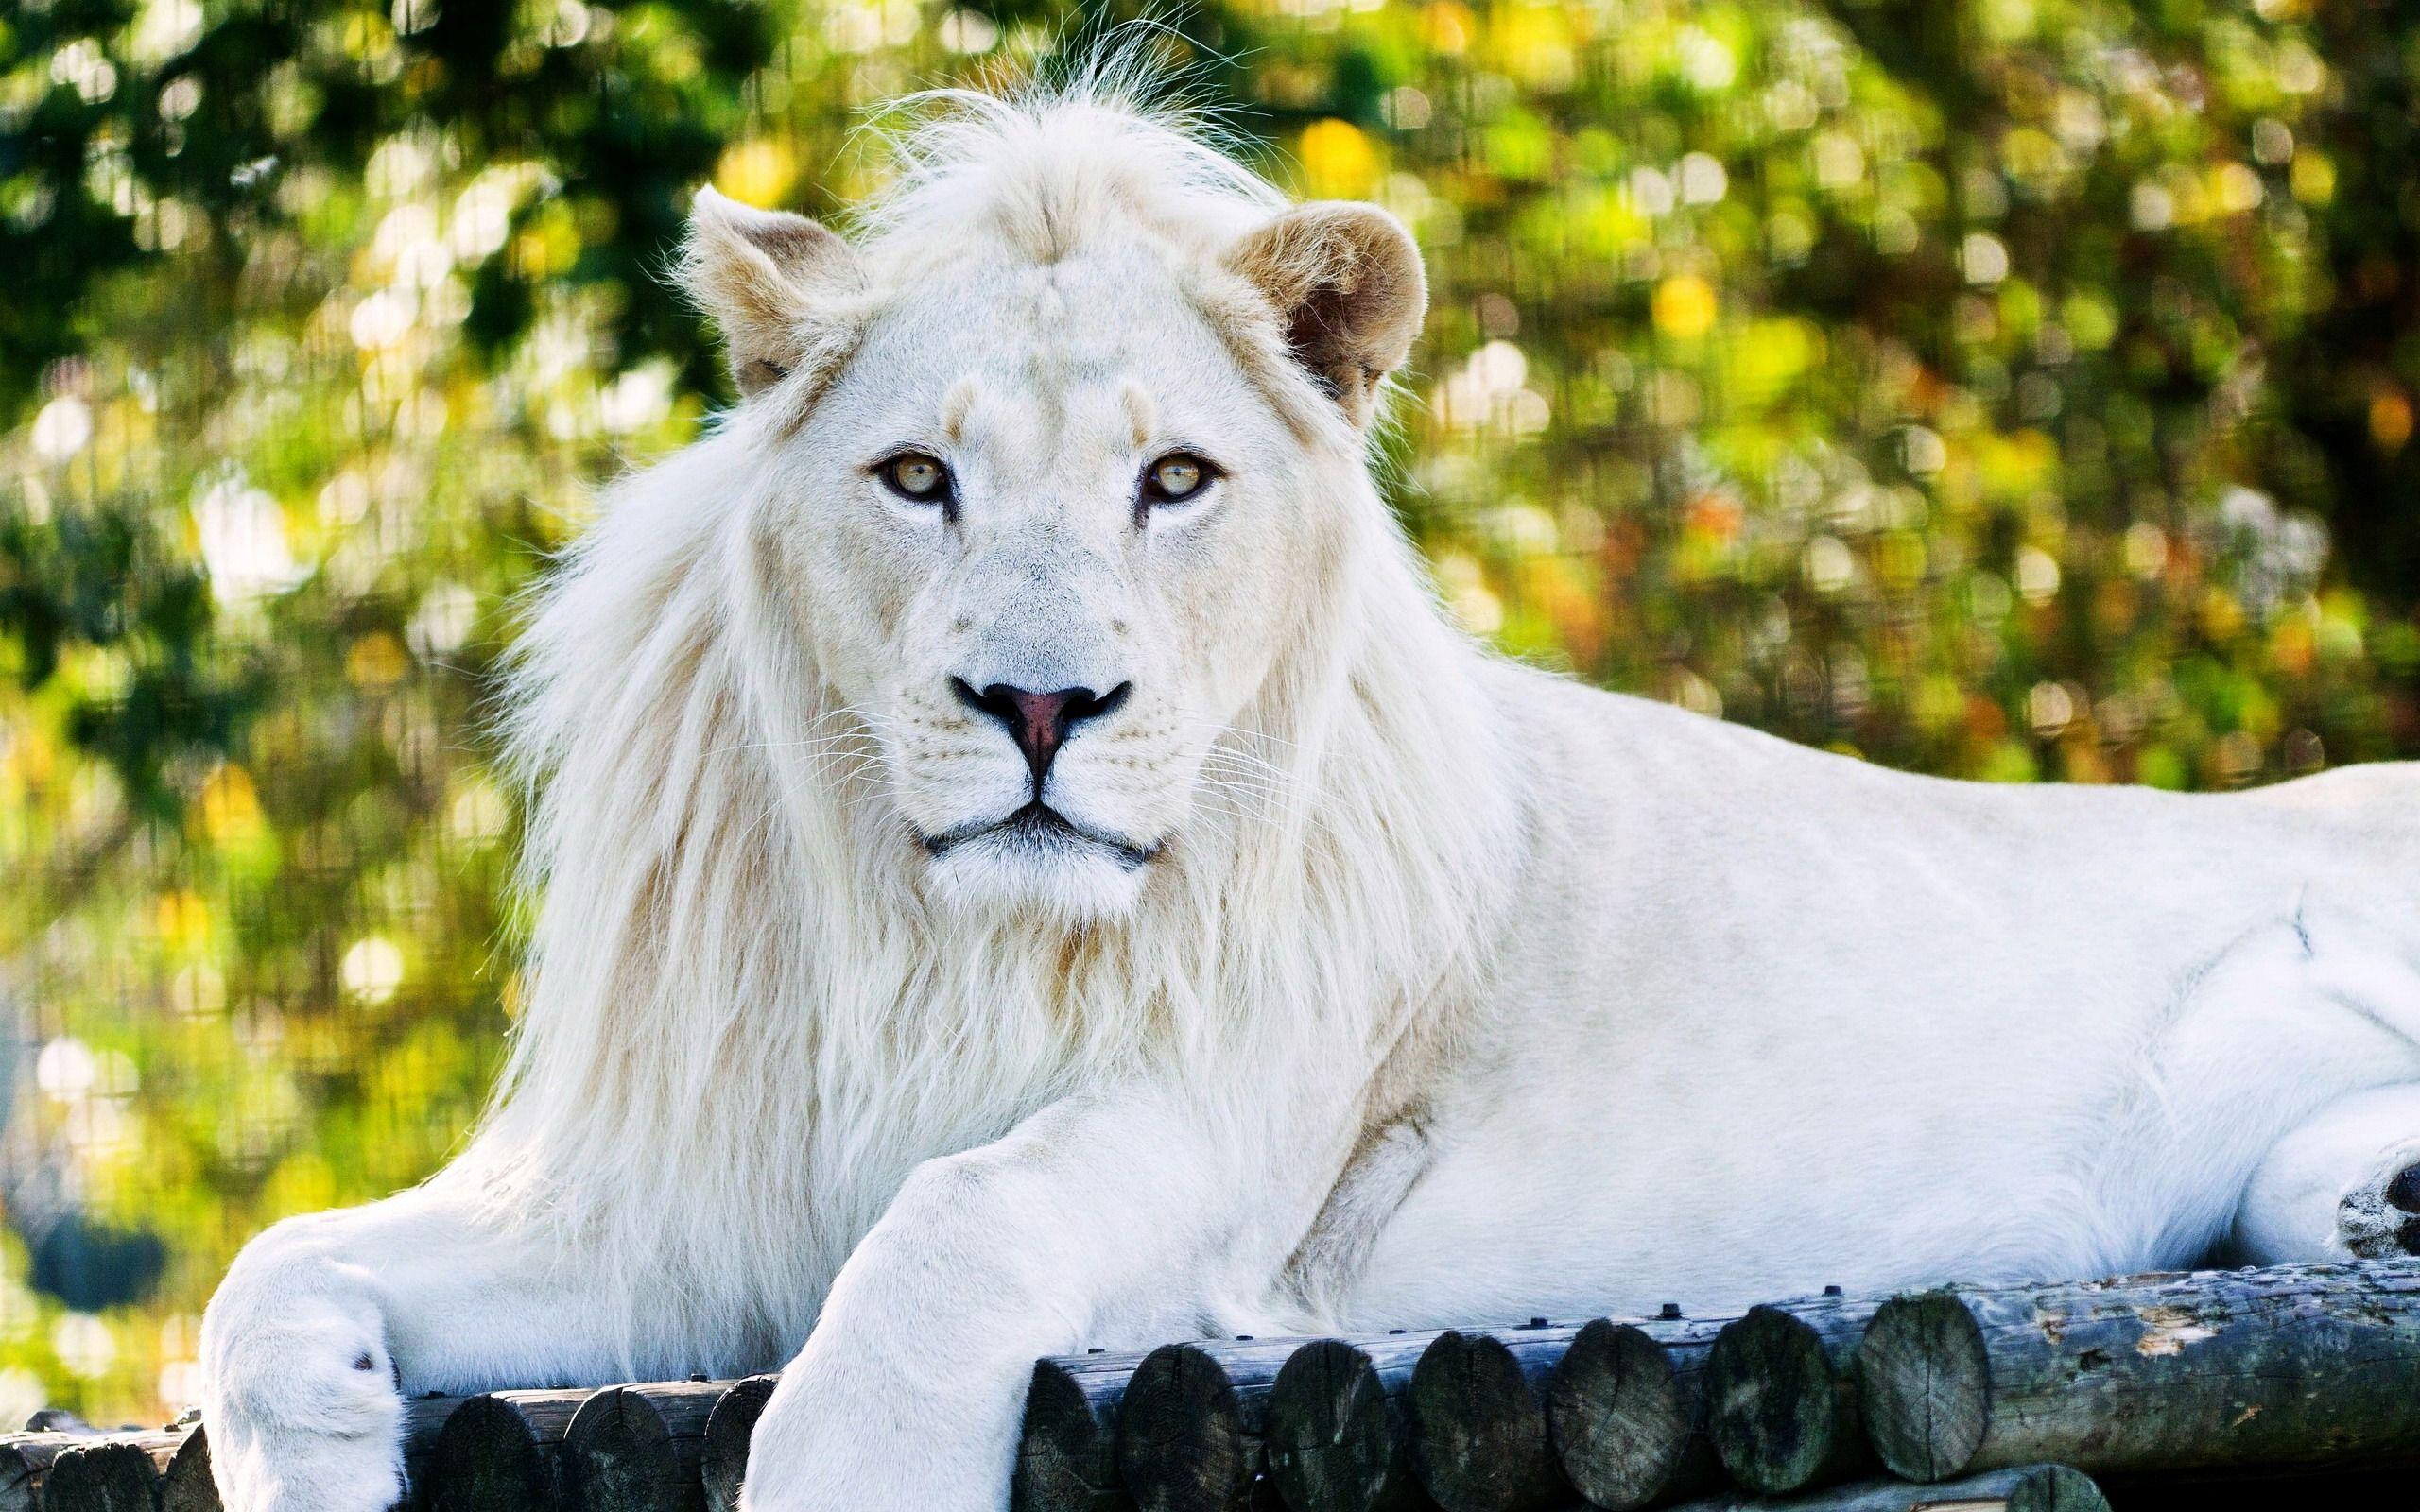 White Lion, HD Animals, 4k Wallpaper, Image, Background, Photo